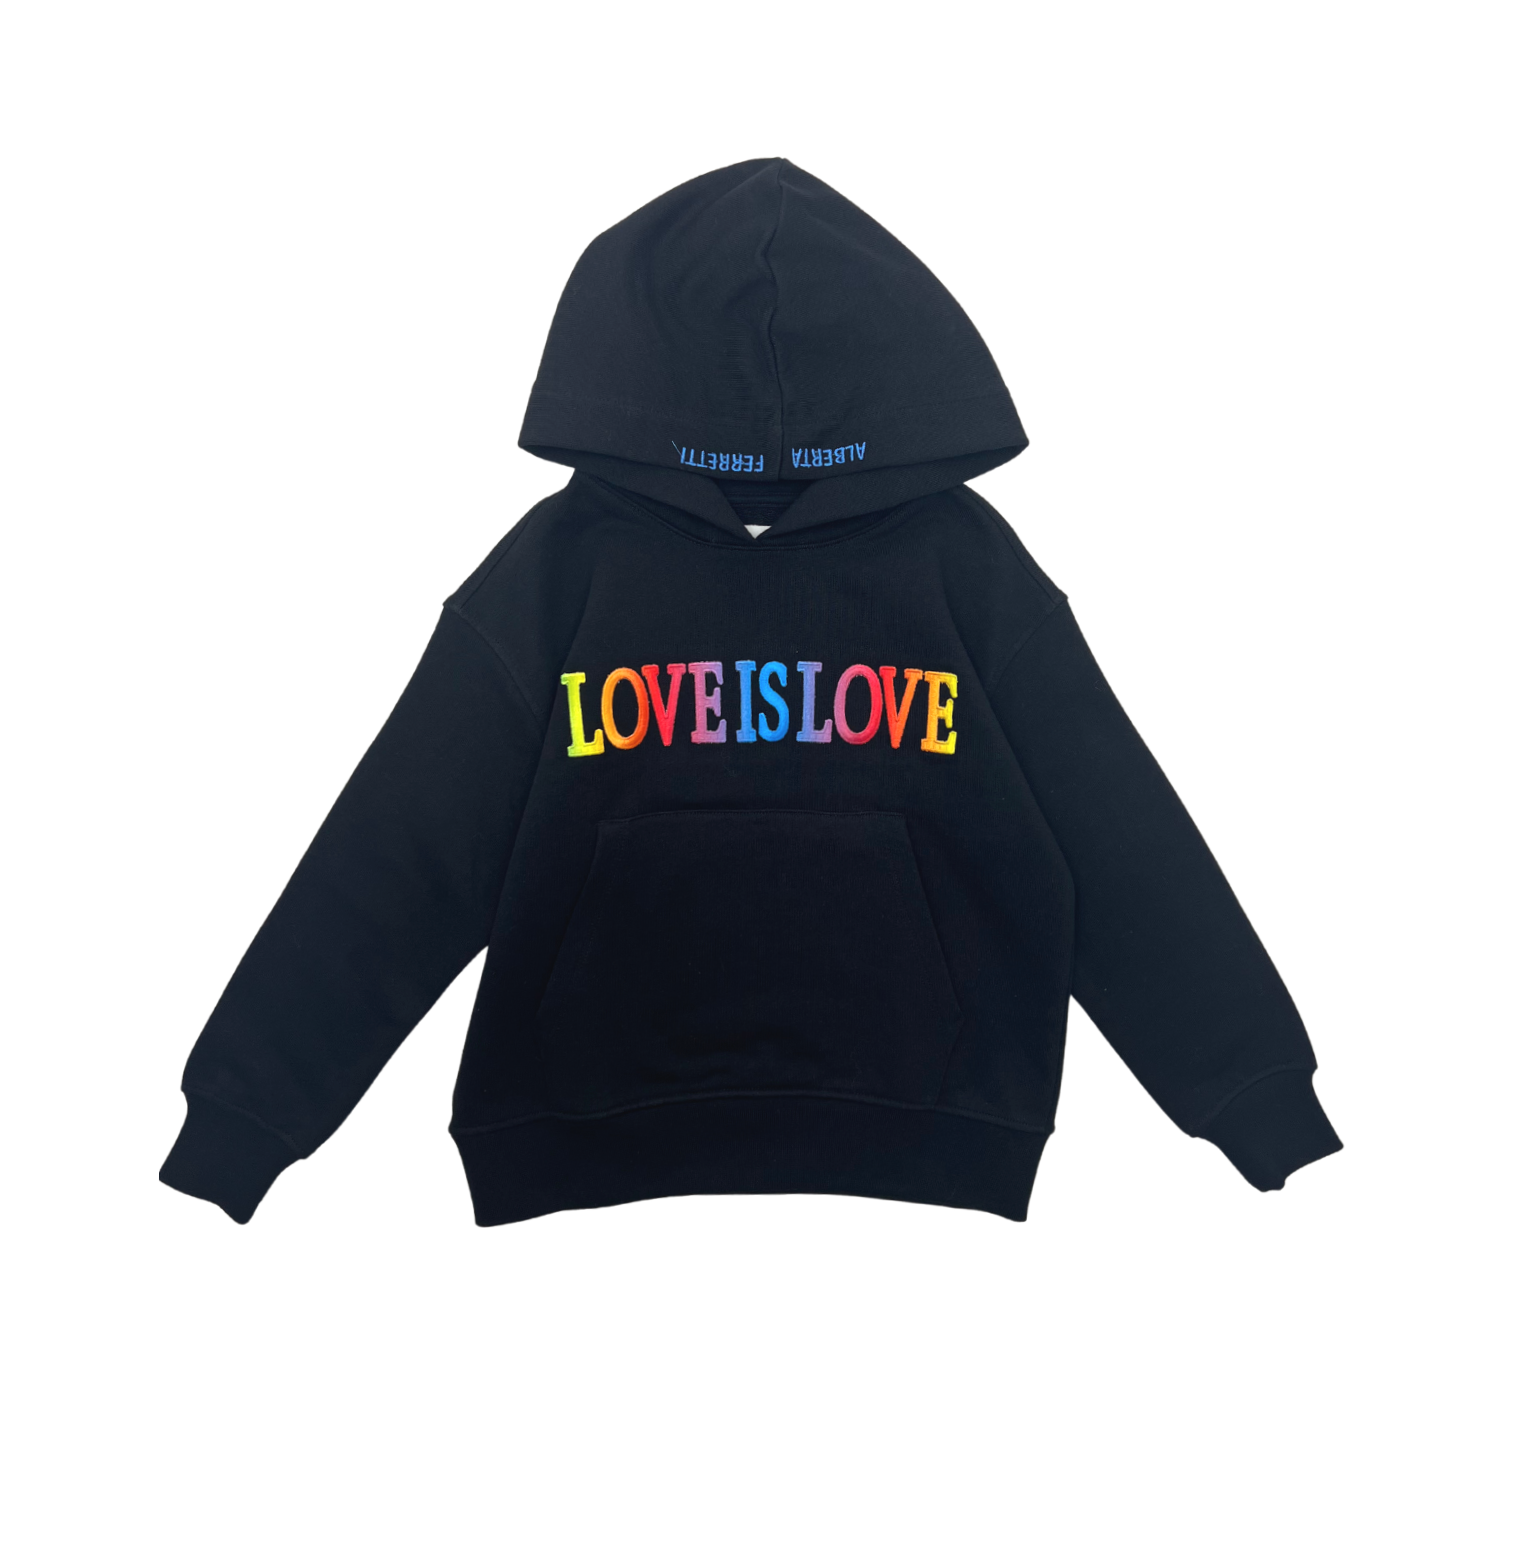 ALBERTA FERRETTI - Love is Love sweatshirt - 4 years old